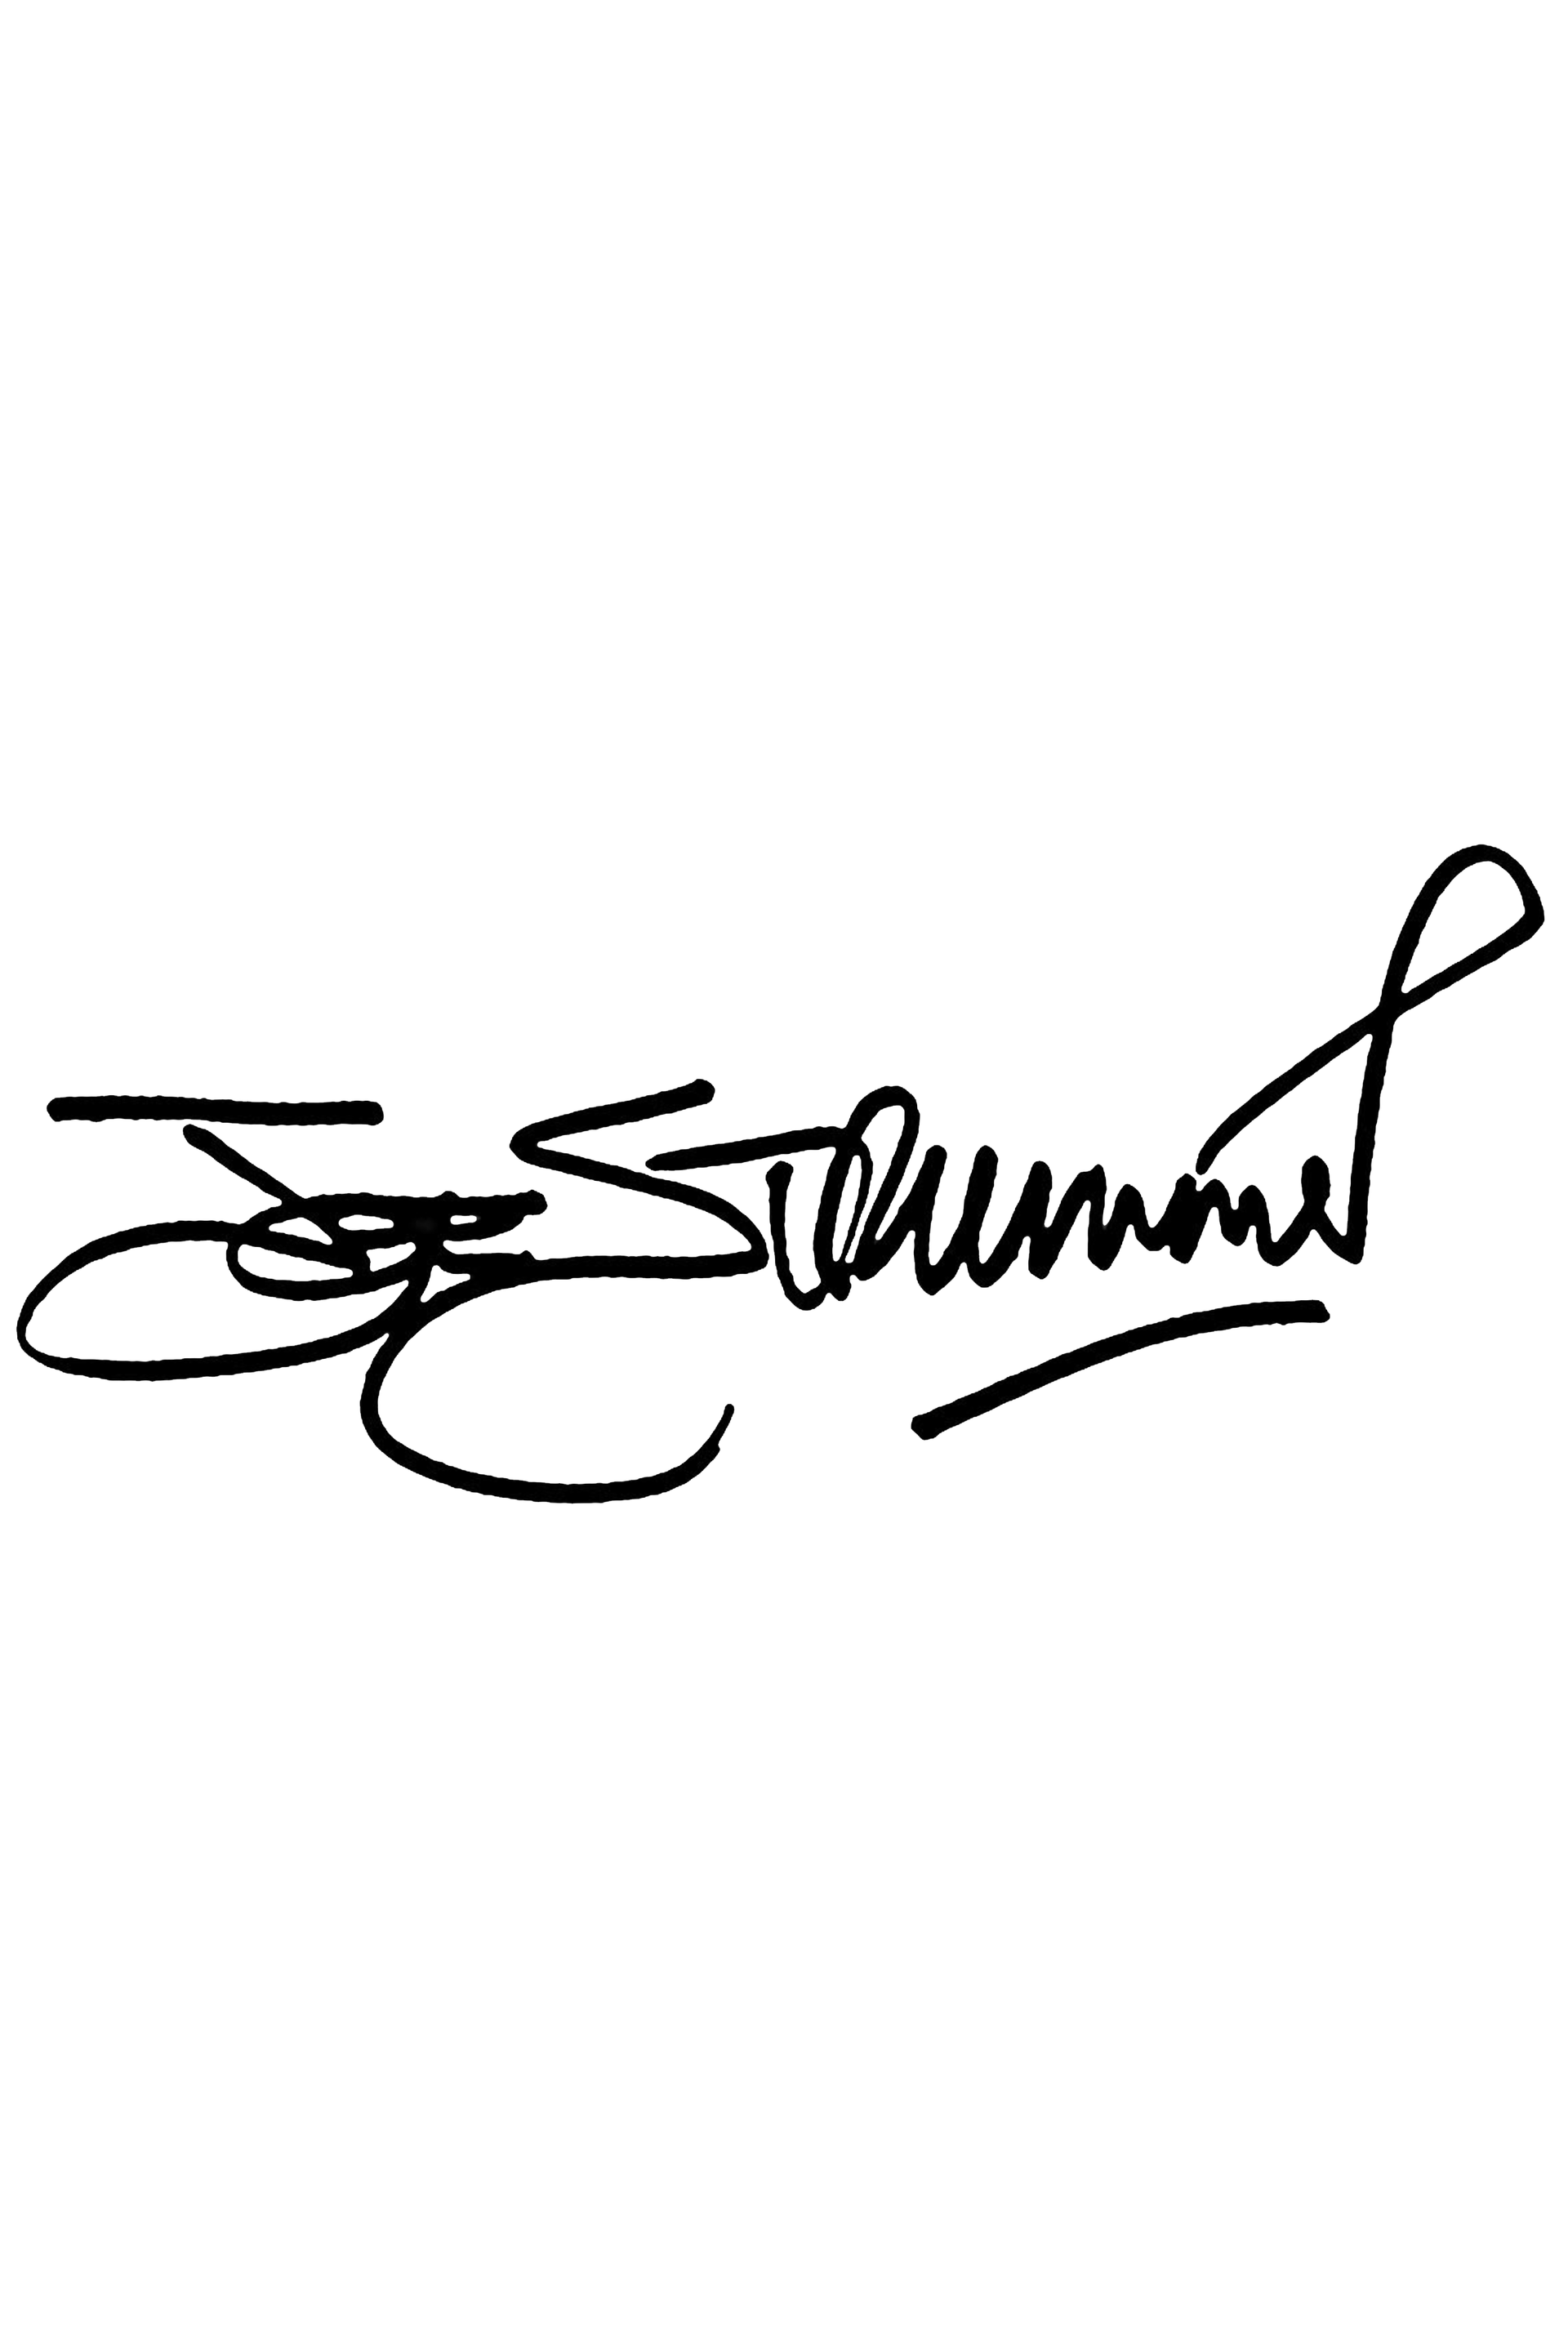 Joe Strummer Signature